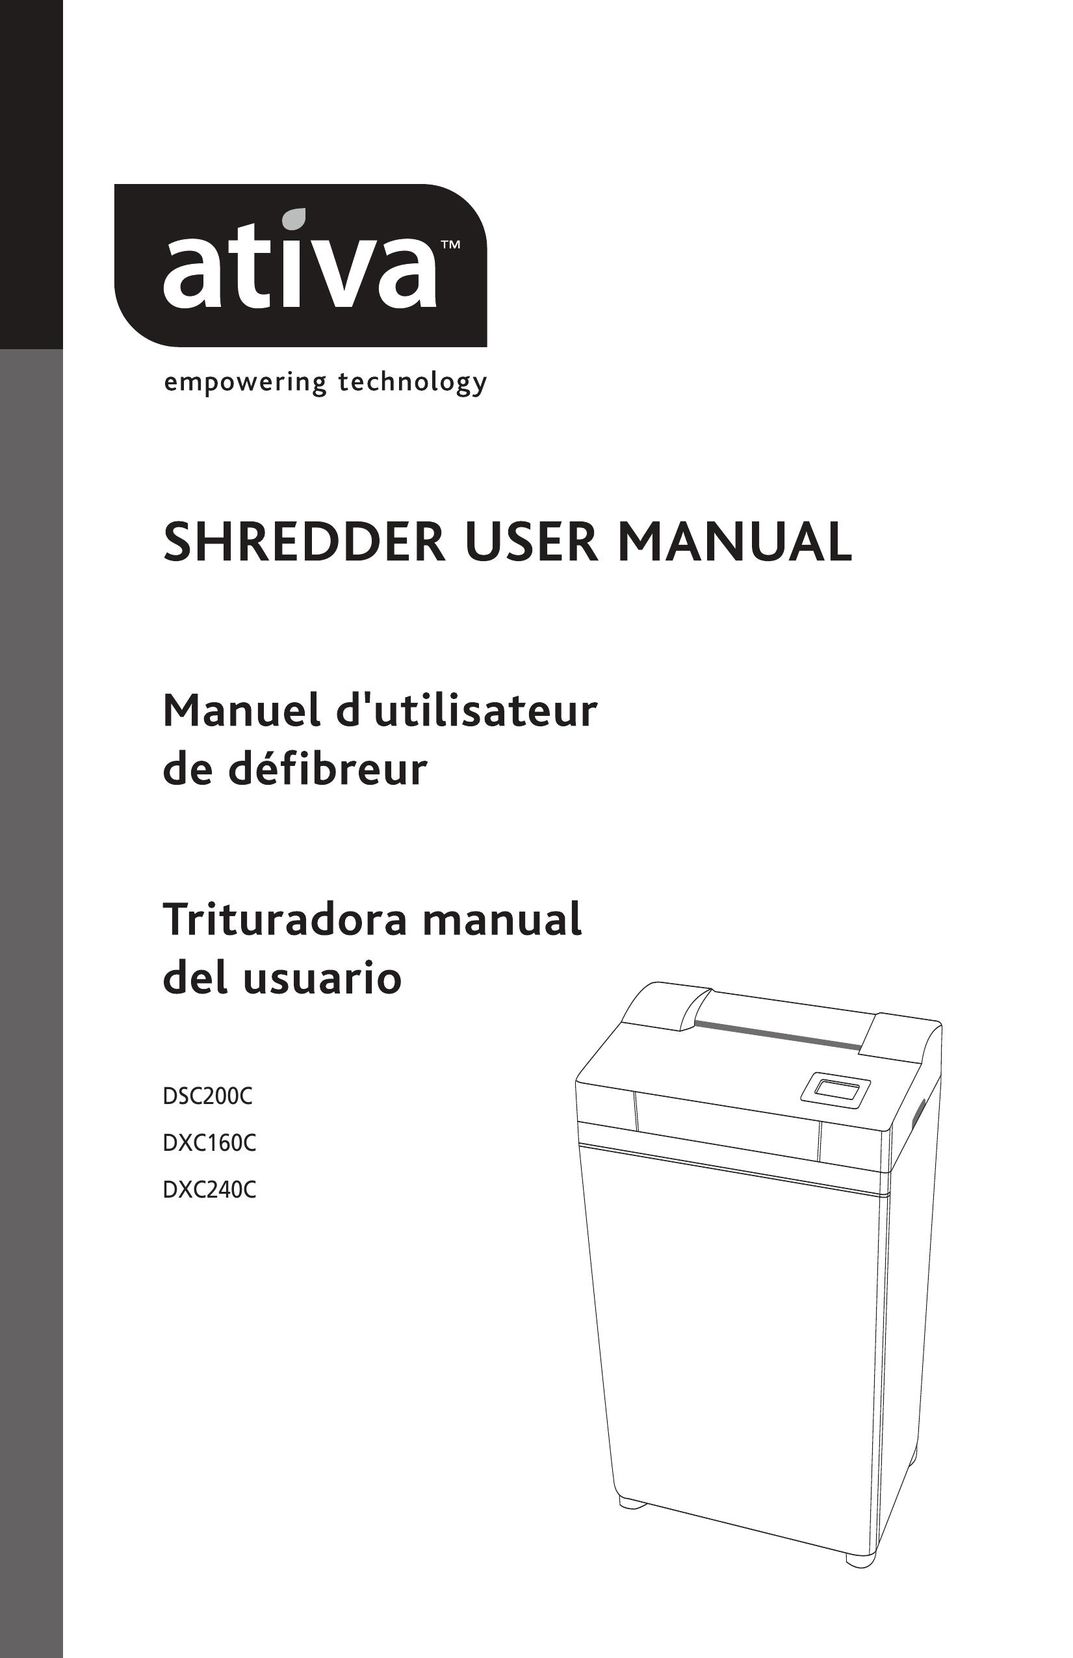 Ativa DSC200C Paper Shredder User Manual